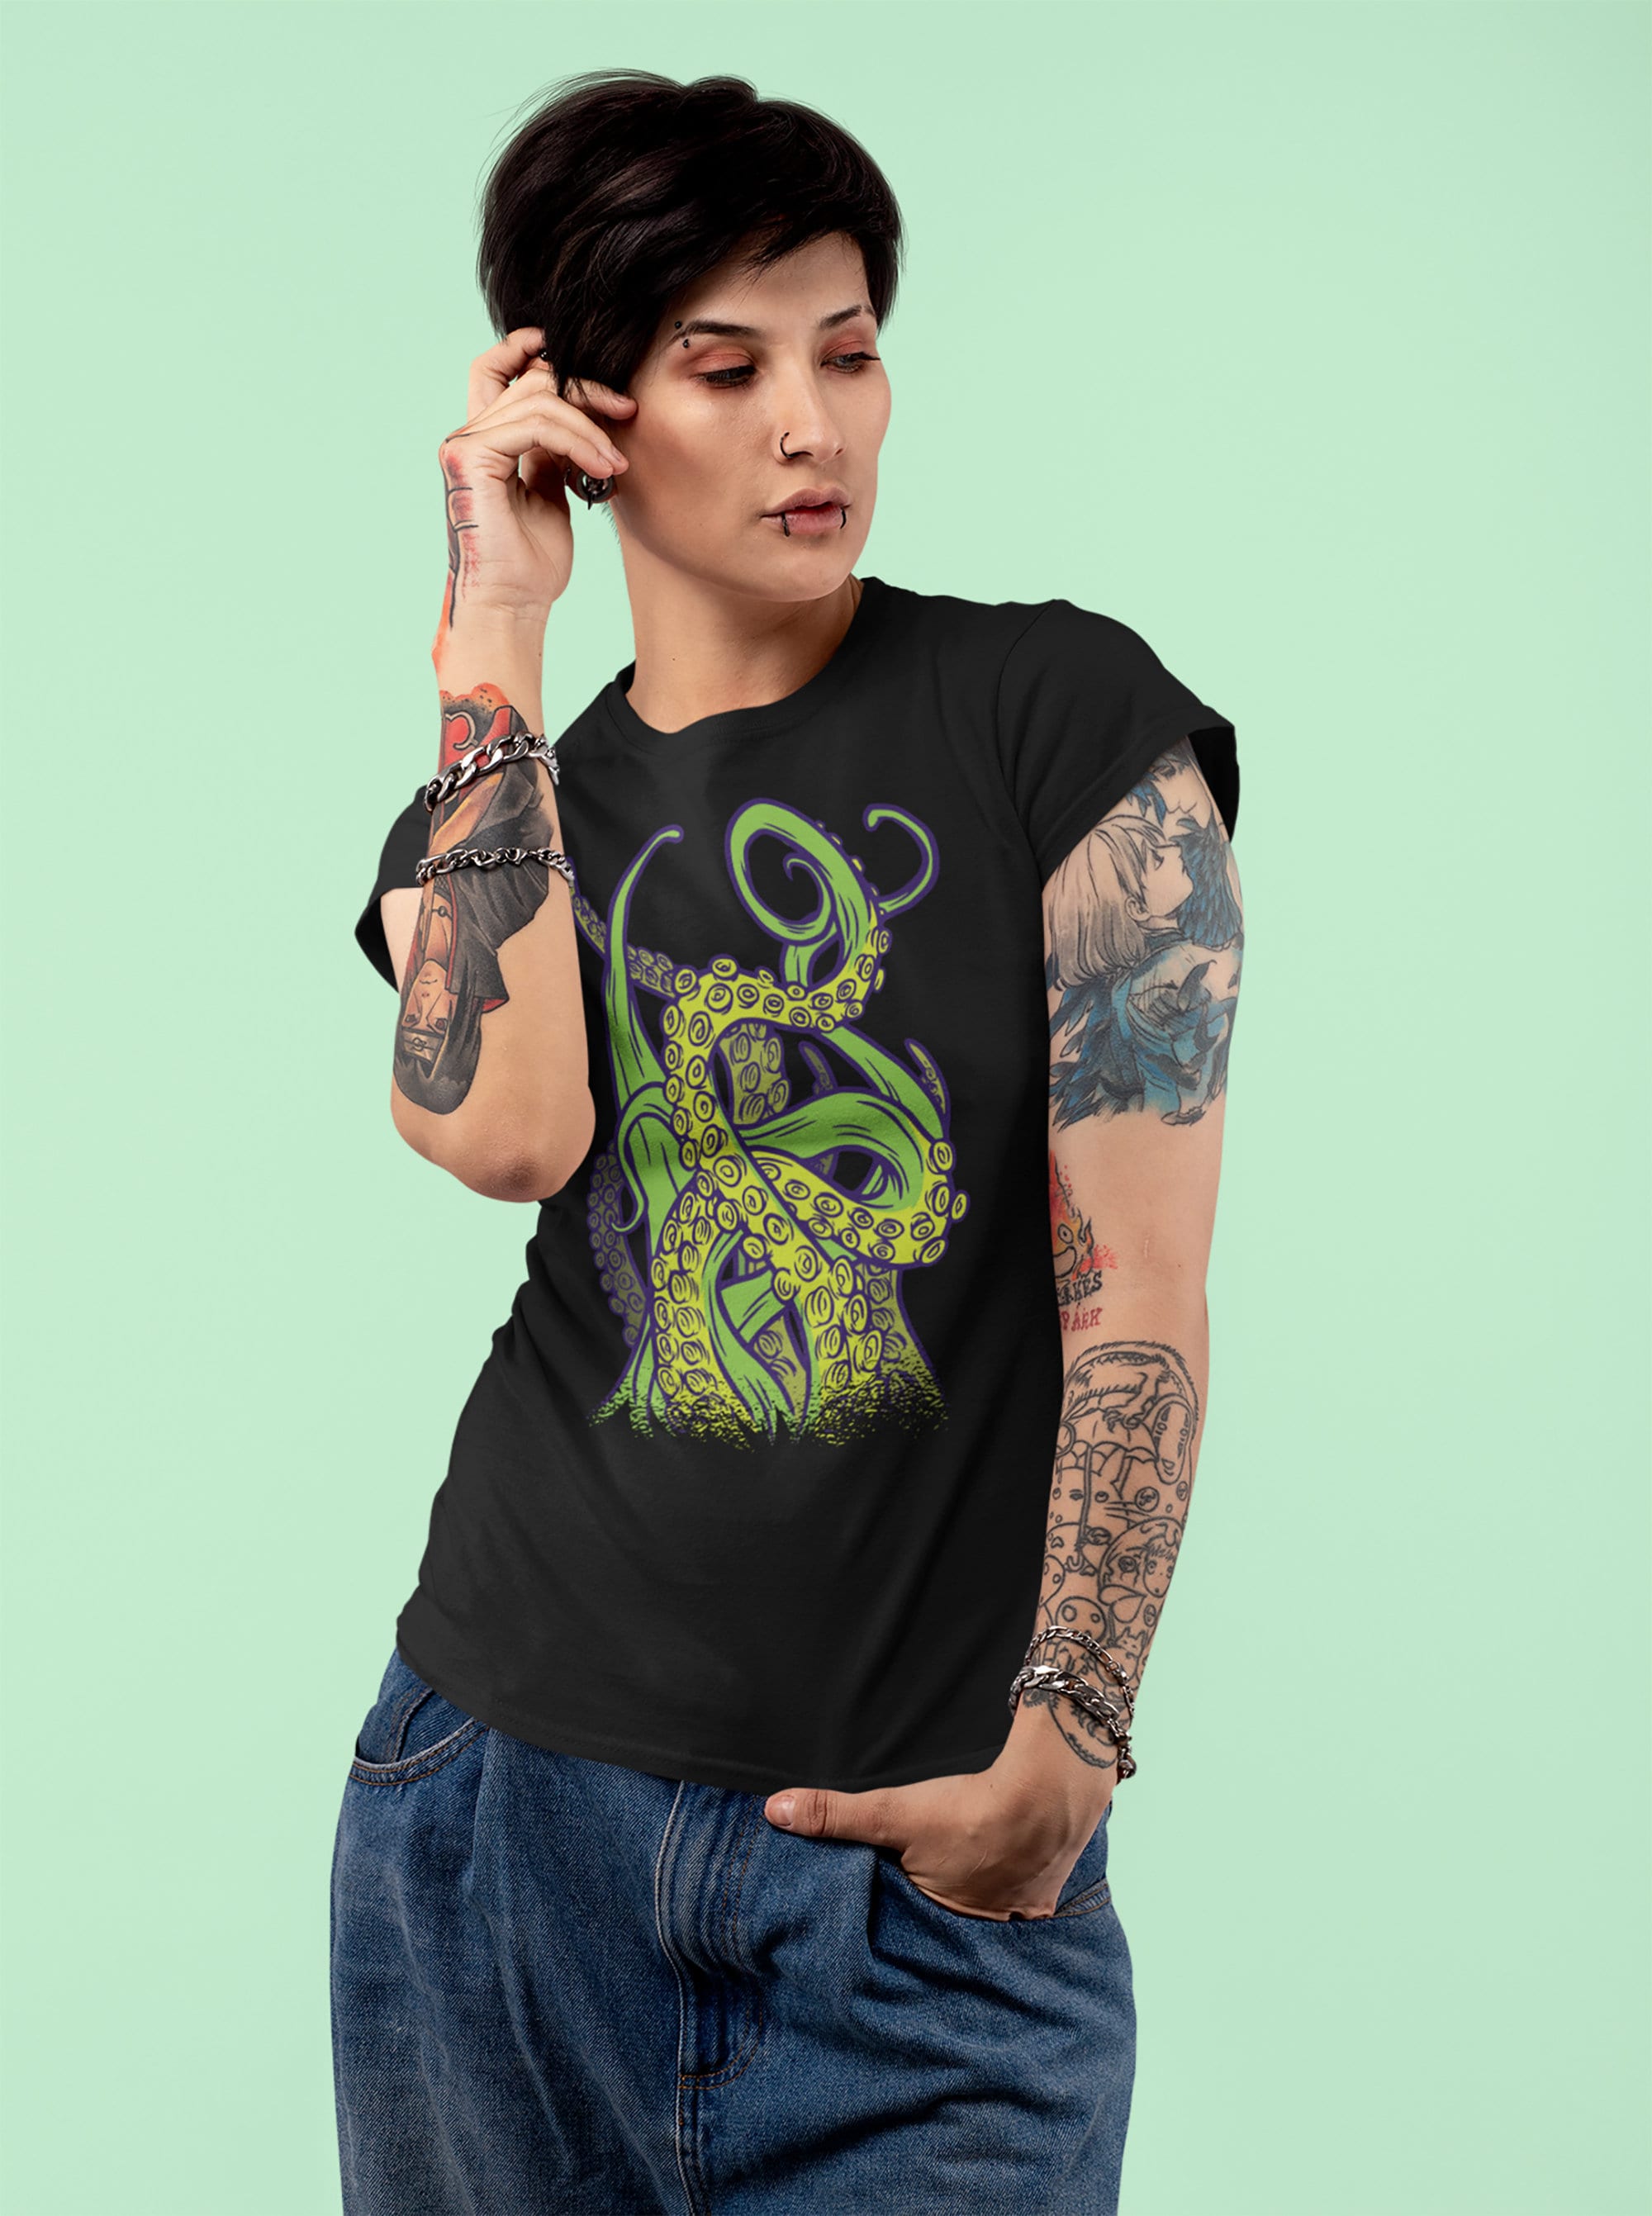 Women's Octopus T Shirt Tentacles Shirt Grunge Tee Aquatic | Etsy